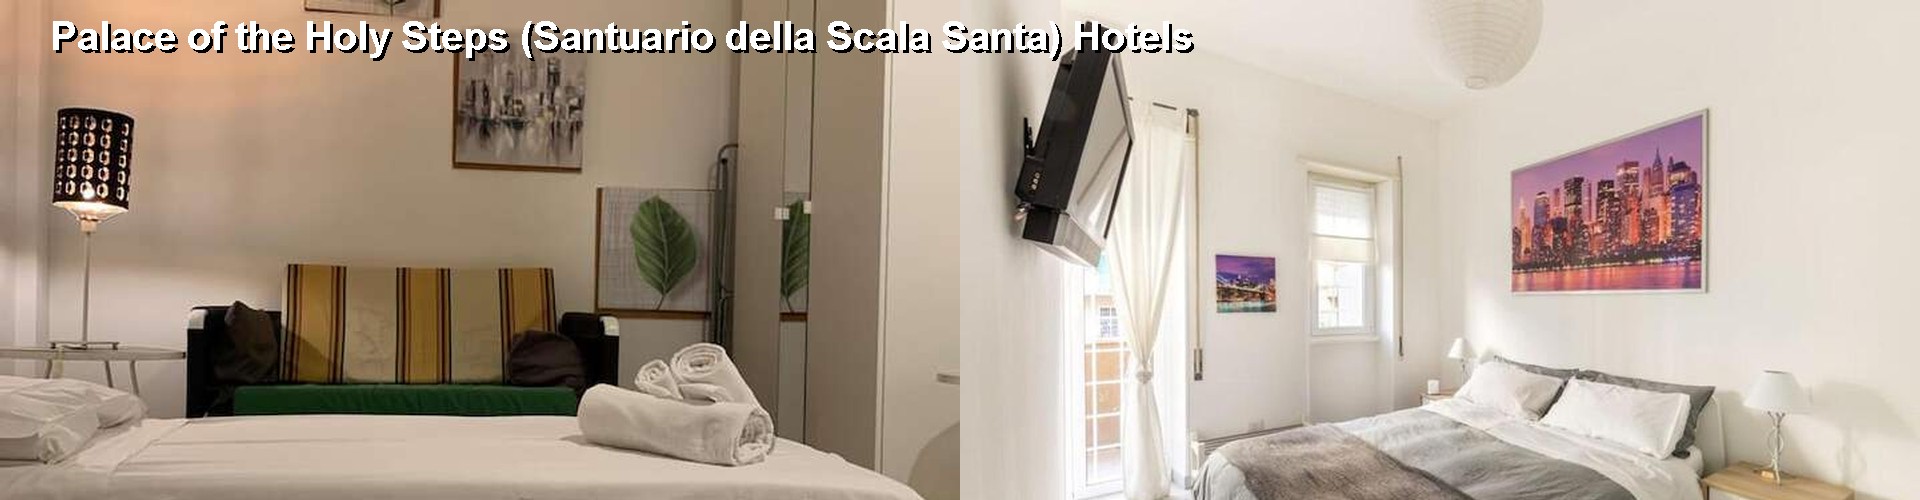 5 Best Hotels near Palace of the Holy Steps (Santuario della Scala Santa)